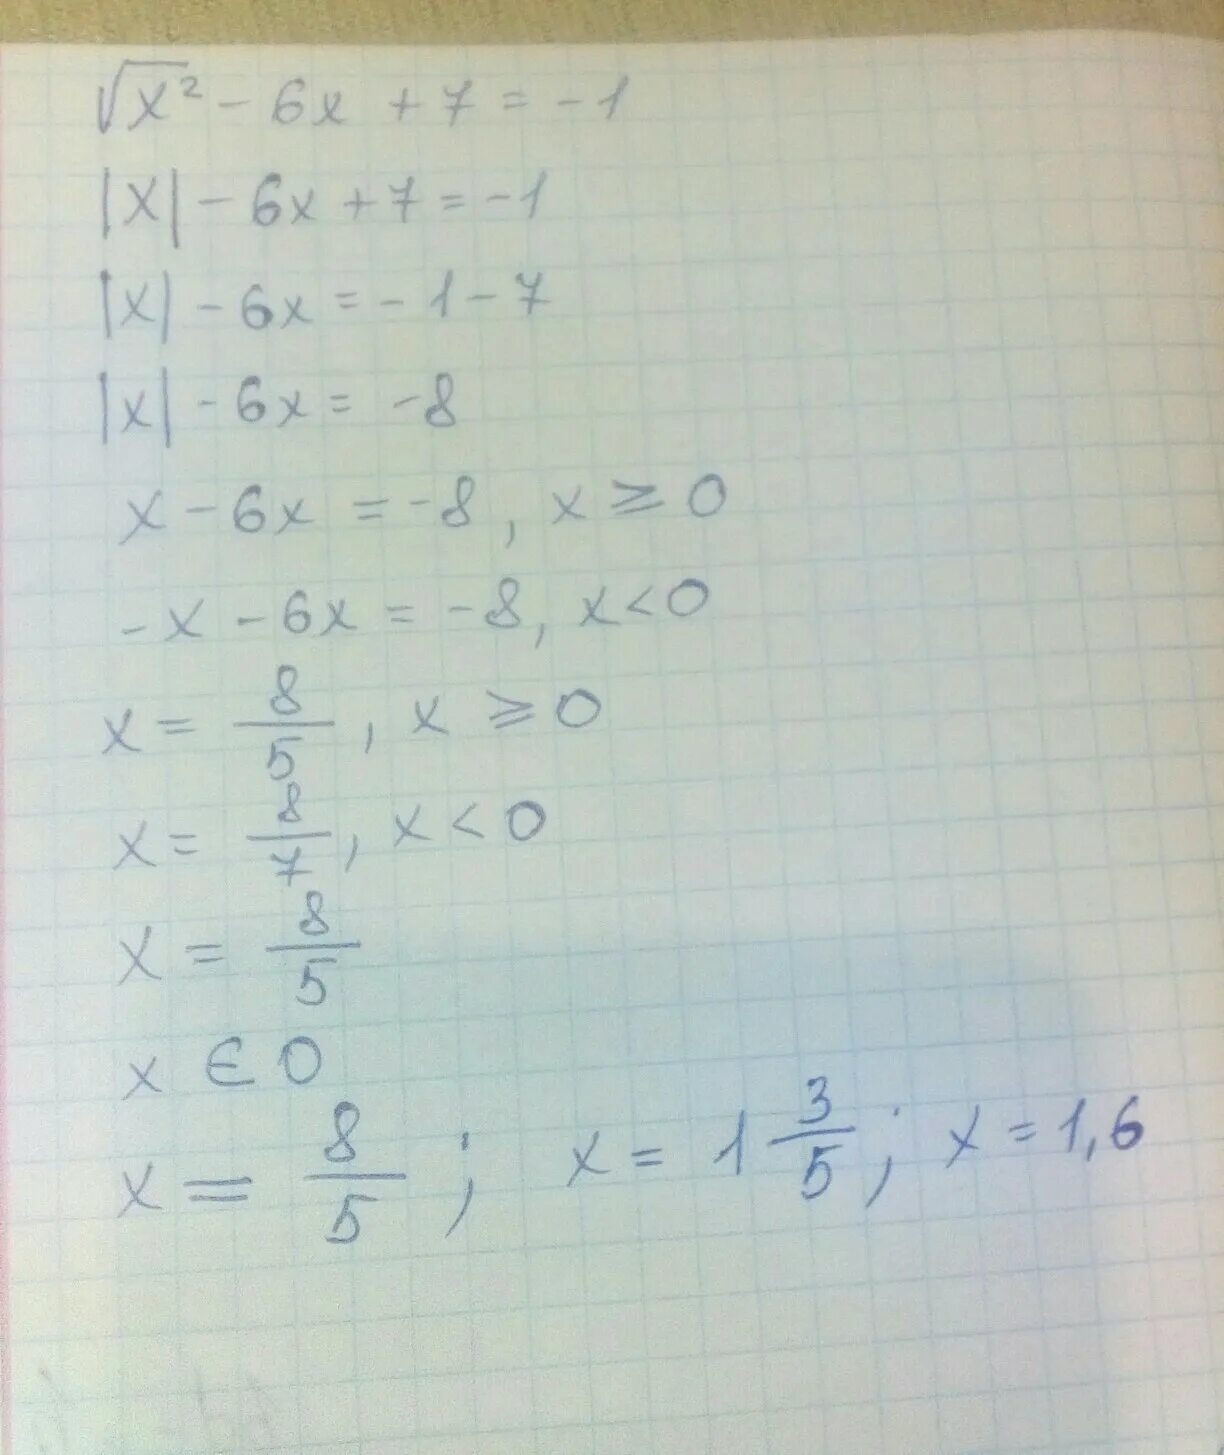 2x 7 ответ. 7^X-7^X-1=6. X 7 решение. X-X/7=6. 6x7.